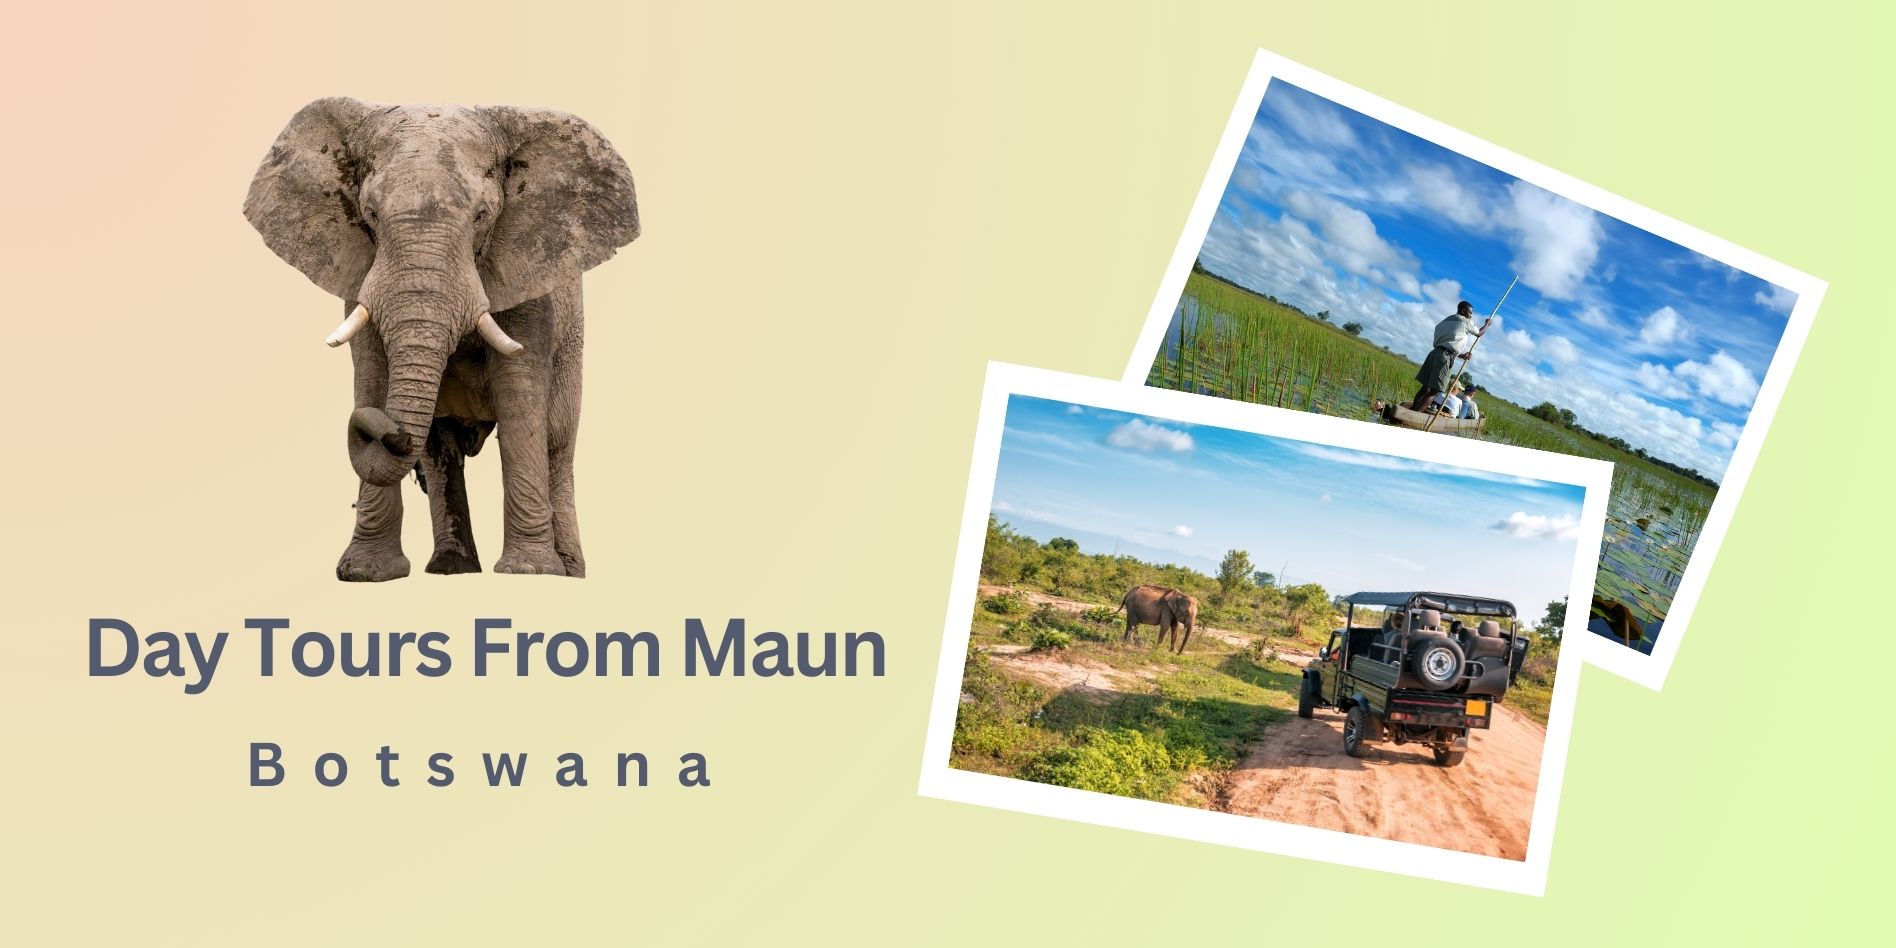 Maun Day Trips header with an elephant and safari vehicle photo